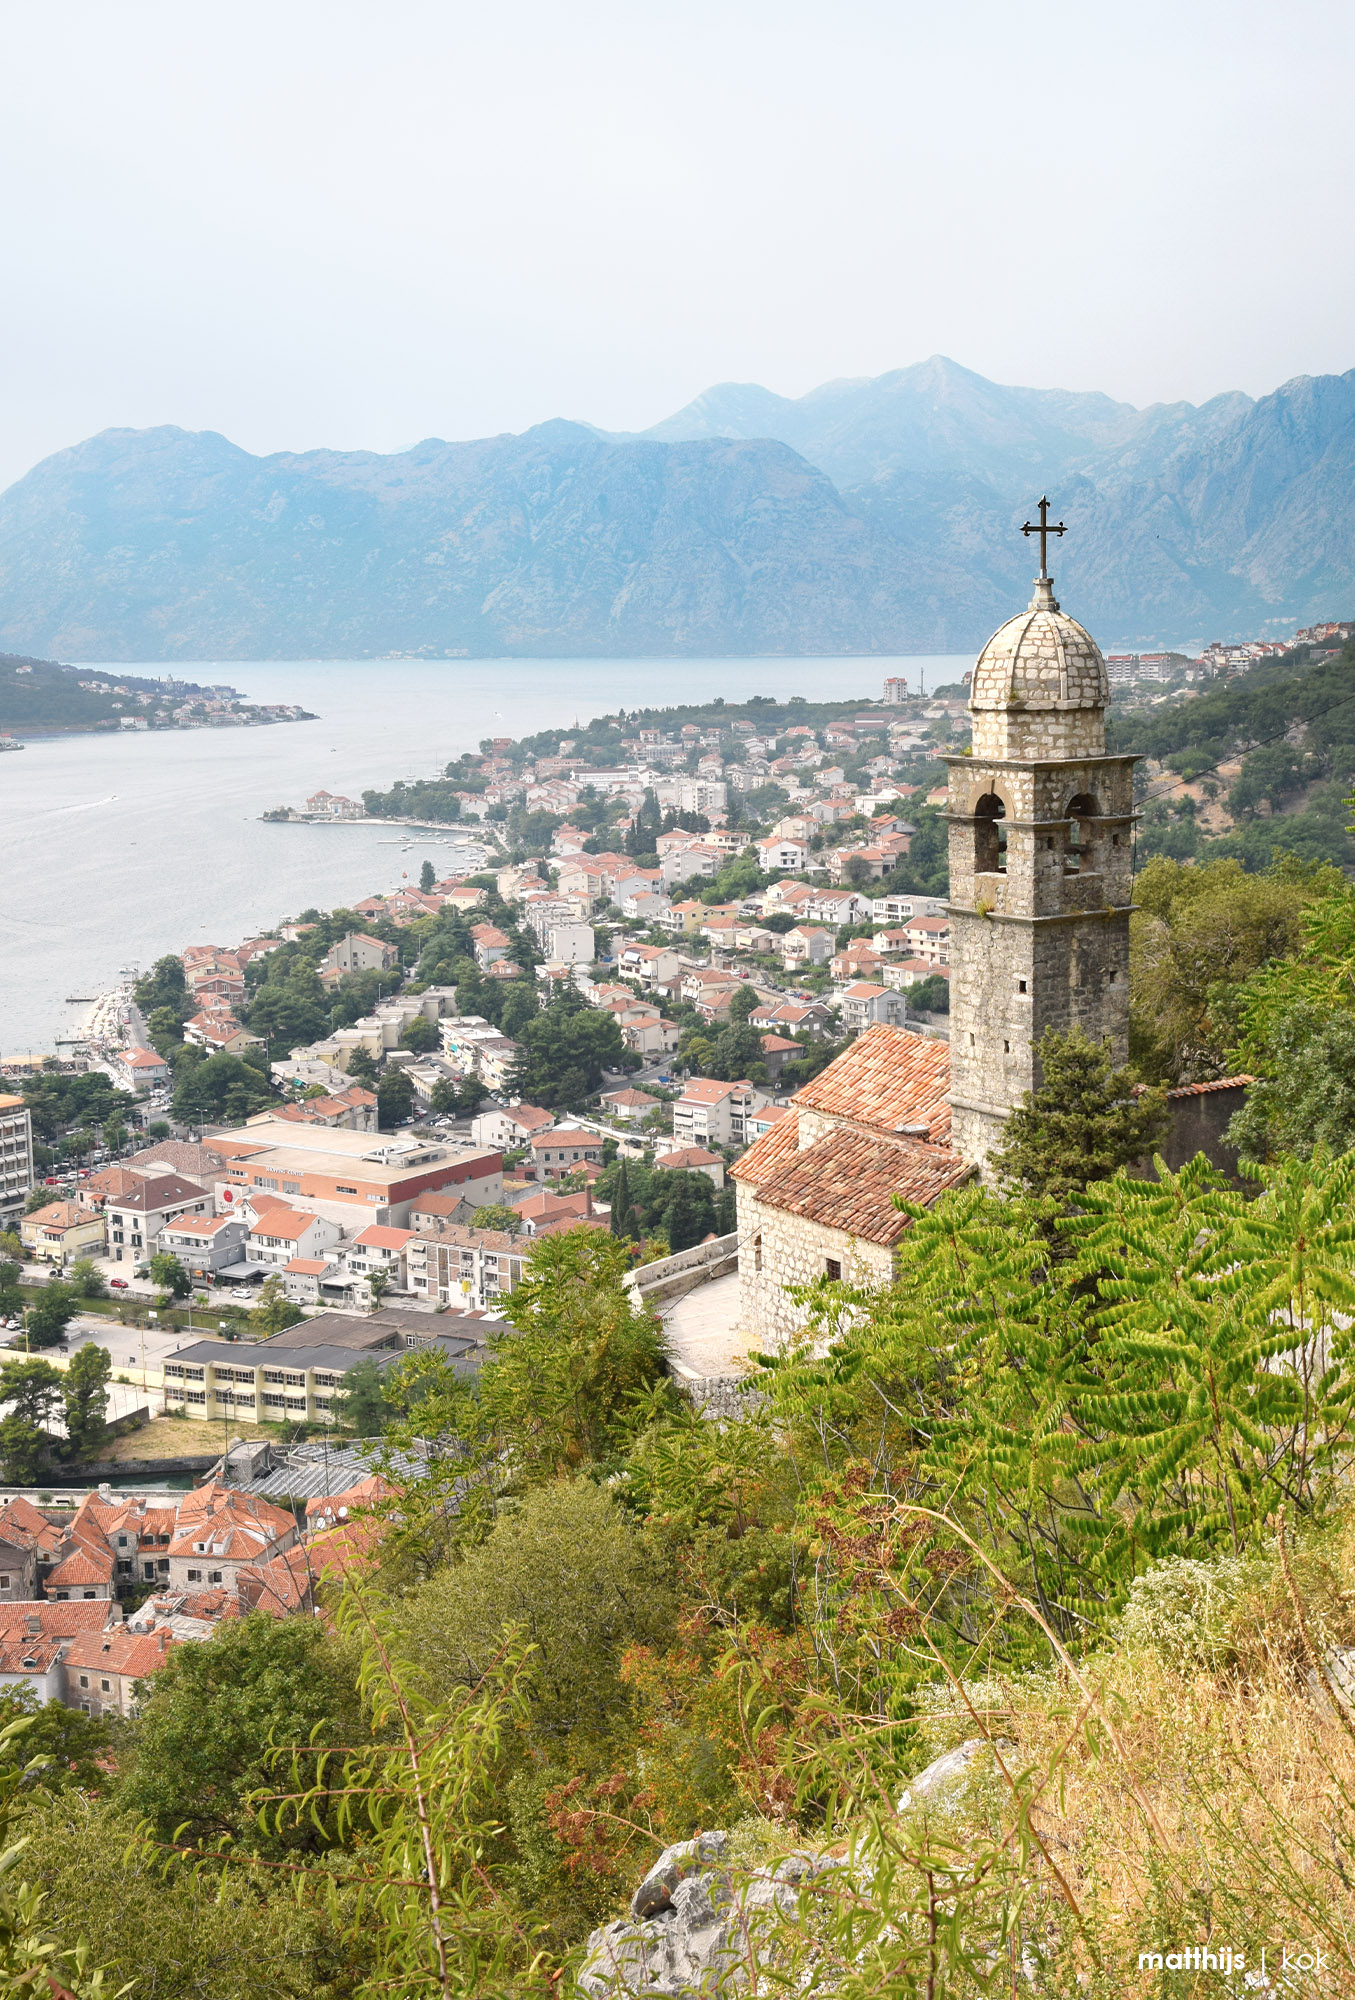 View over Bay of Kotor, Montenegro | Photo by Matthijs Kok